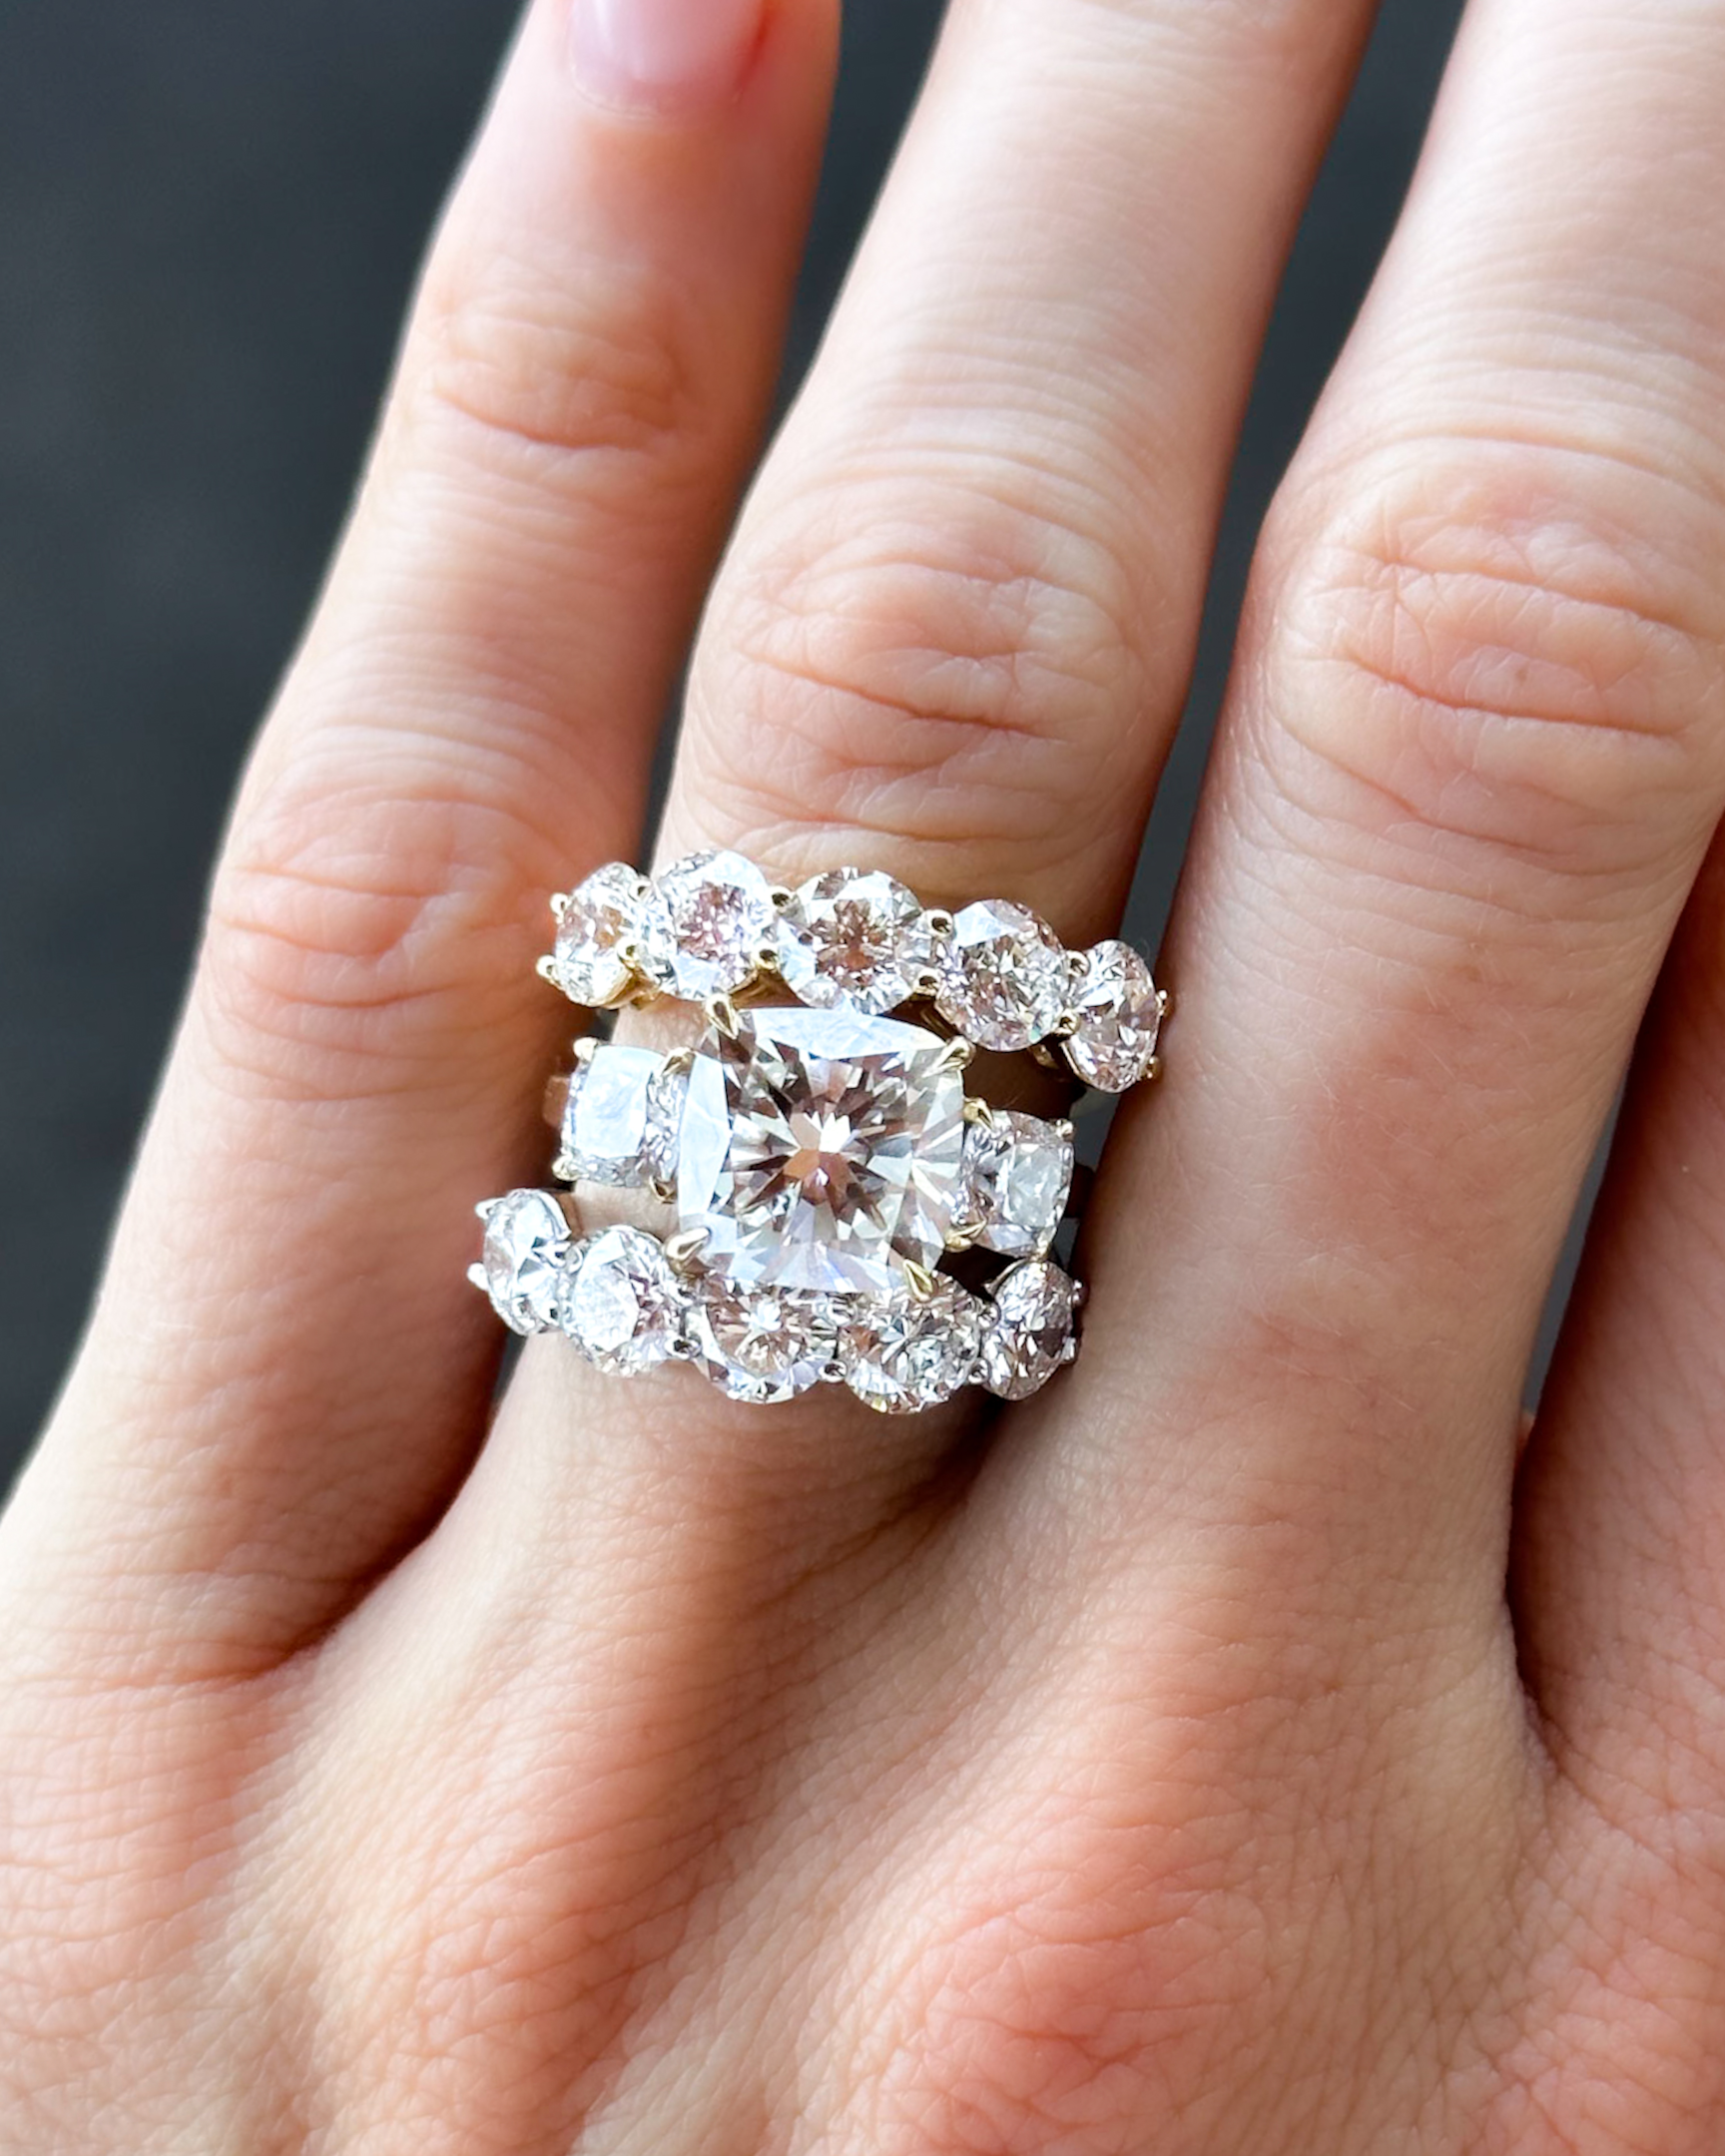 GOODSTONE Triad Engagement Ring With Cushion Cut Diamonds